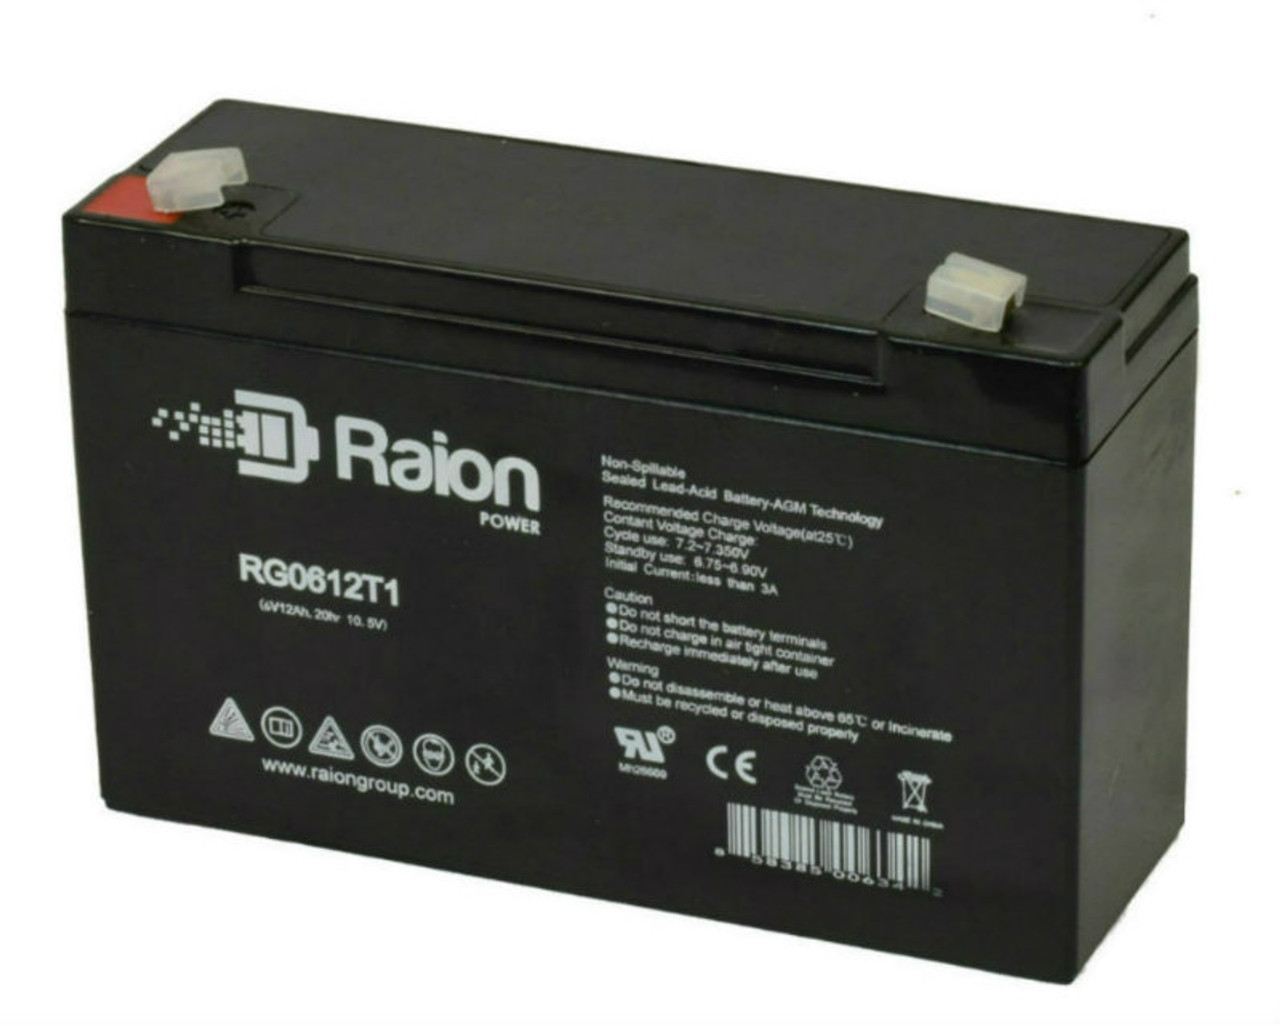 Raion Power RG06120T1 Replacement 6V 12Ah Emergency Light Battery for GS Portalac PE6V10